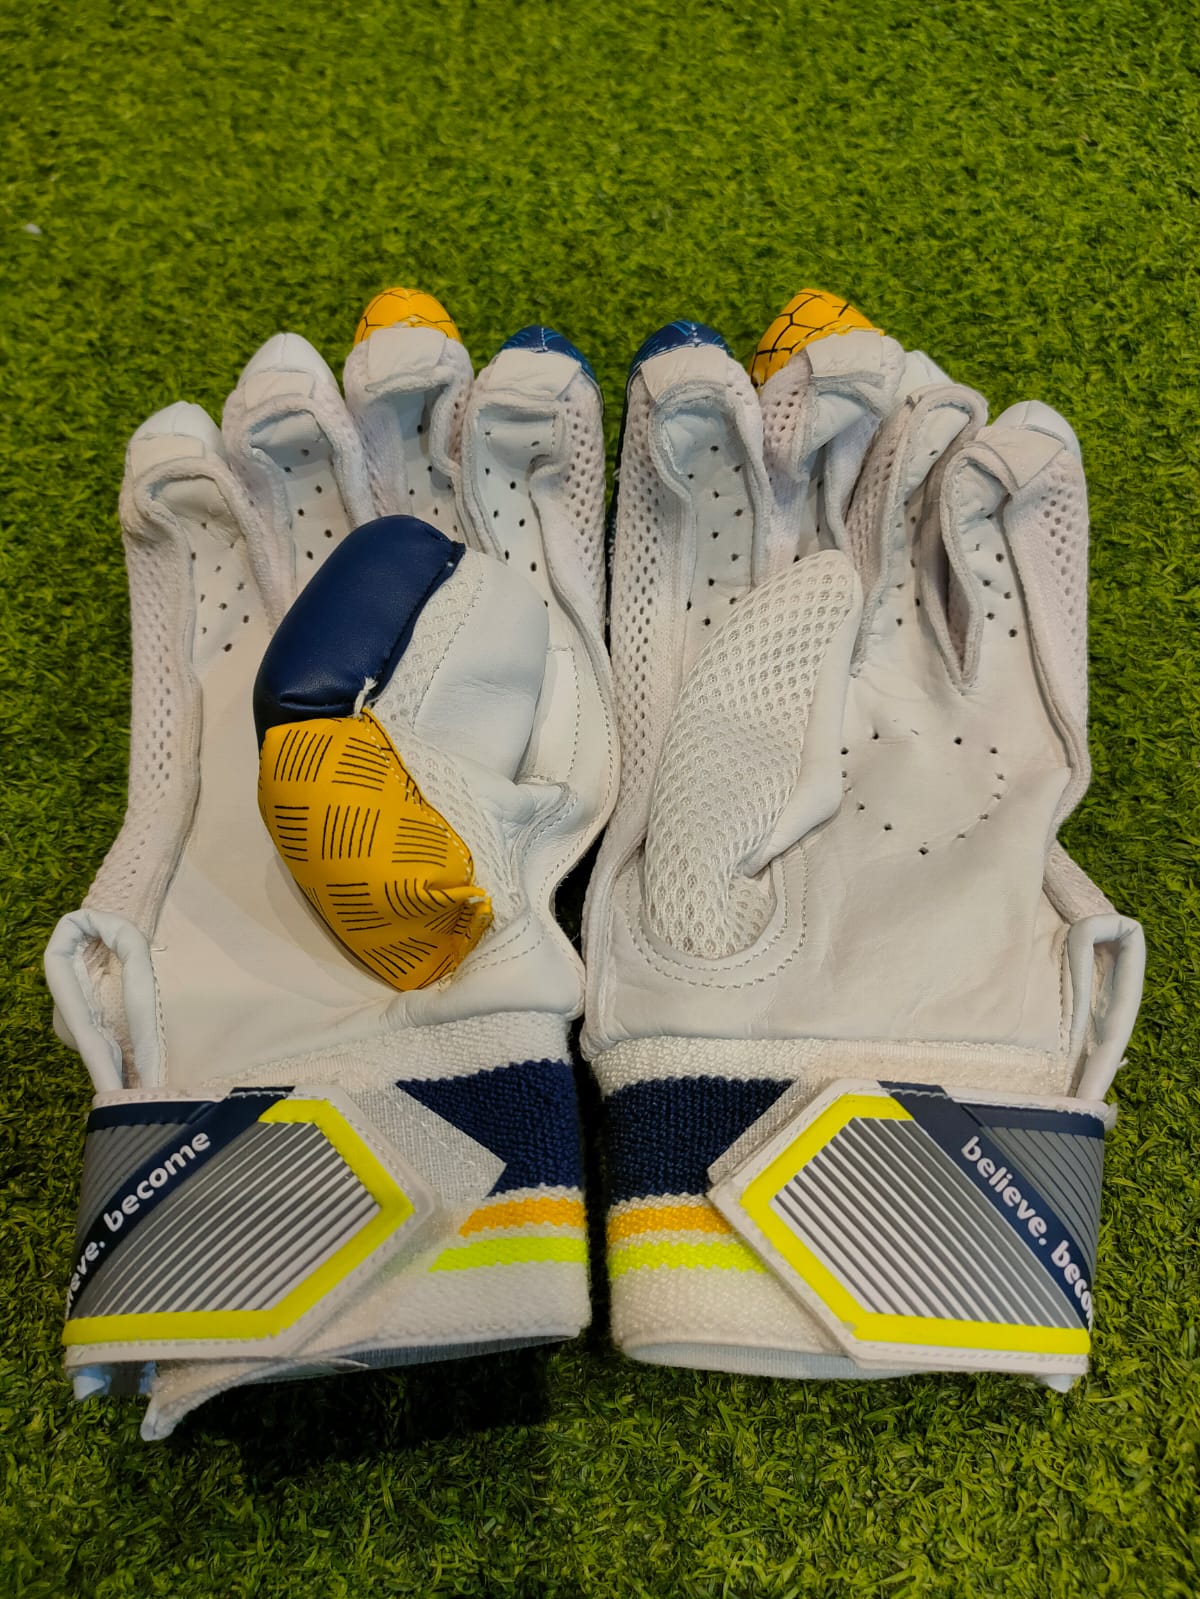 Cricket Batting Gloves SG LEAGUE 